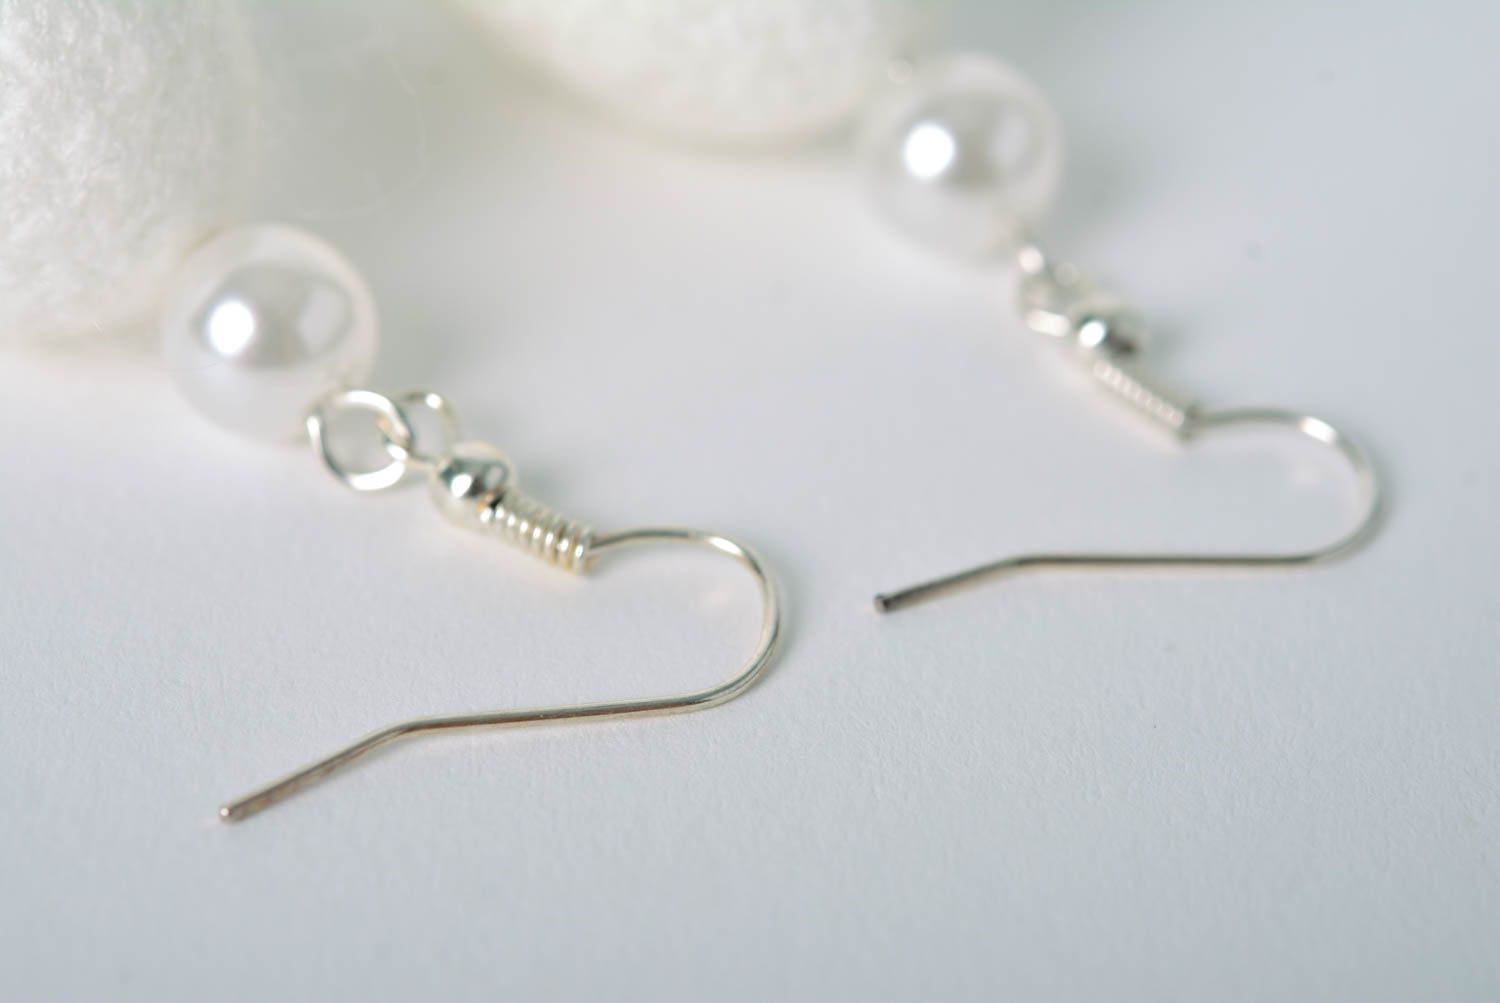 Handmade earrings designer earrings unusual gift beads accessory gift ideas photo 4